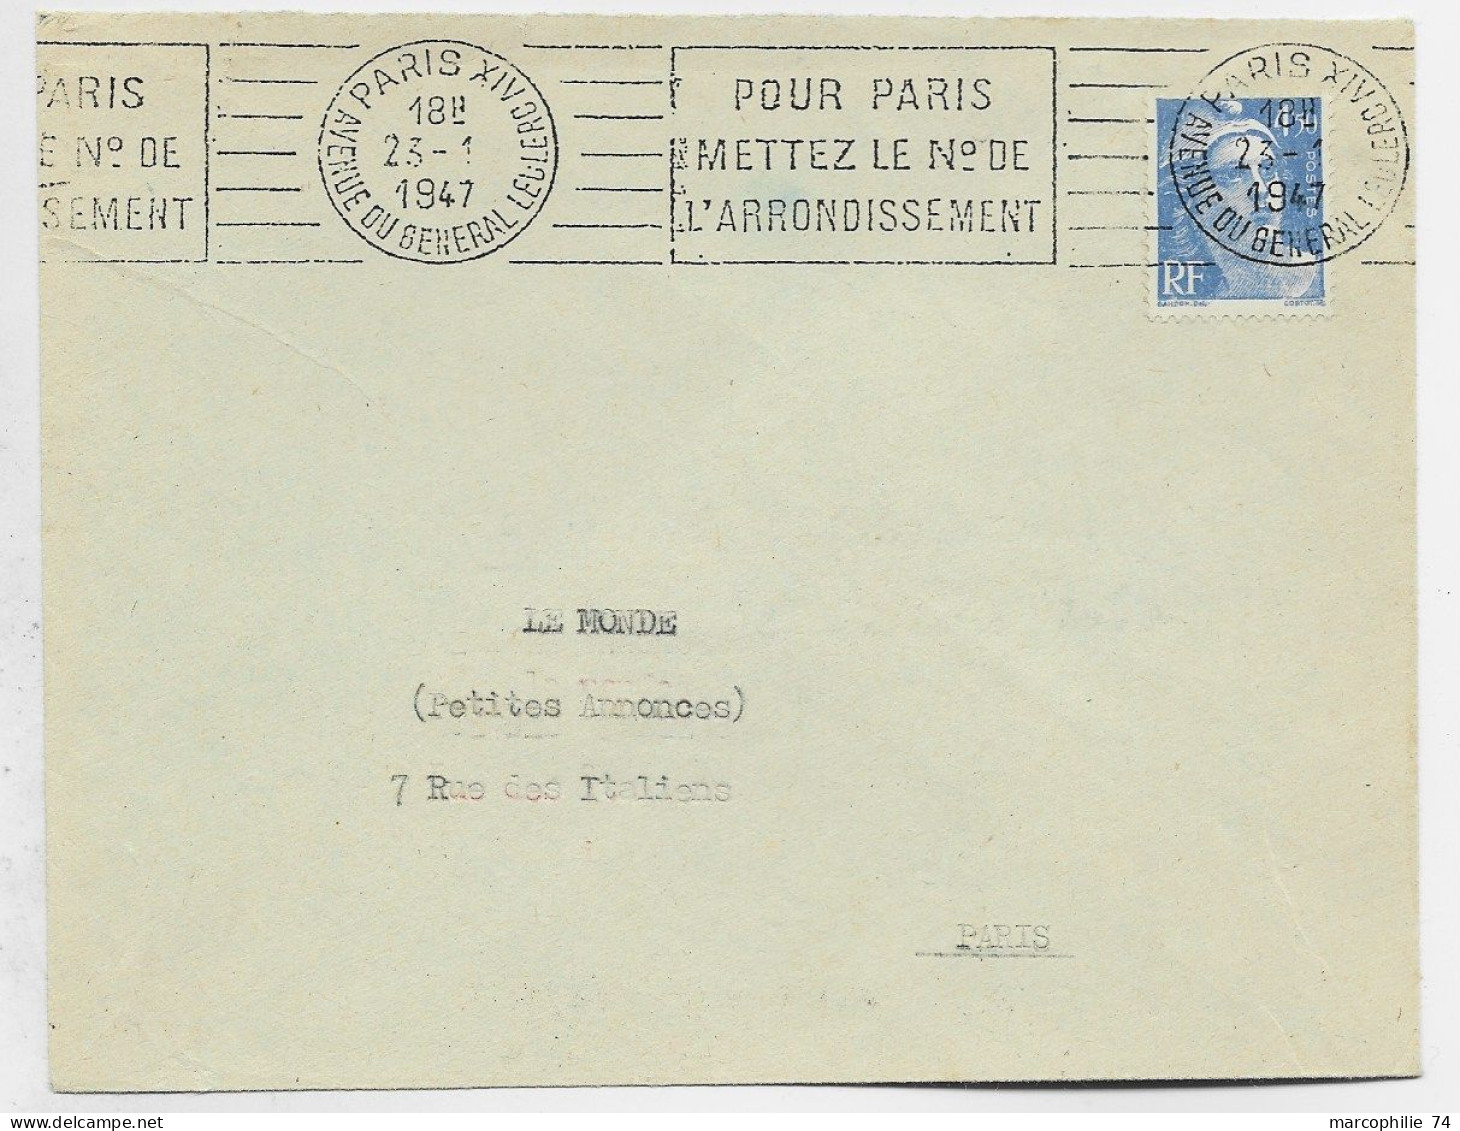 GANDON 4FR50 SEUL LETTRE MANQUE UN RABAT  MEC PARIS XIV 23.1.1947 1ER JOUR DU TIMBRE - 1945-54 Marianna Di Gandon